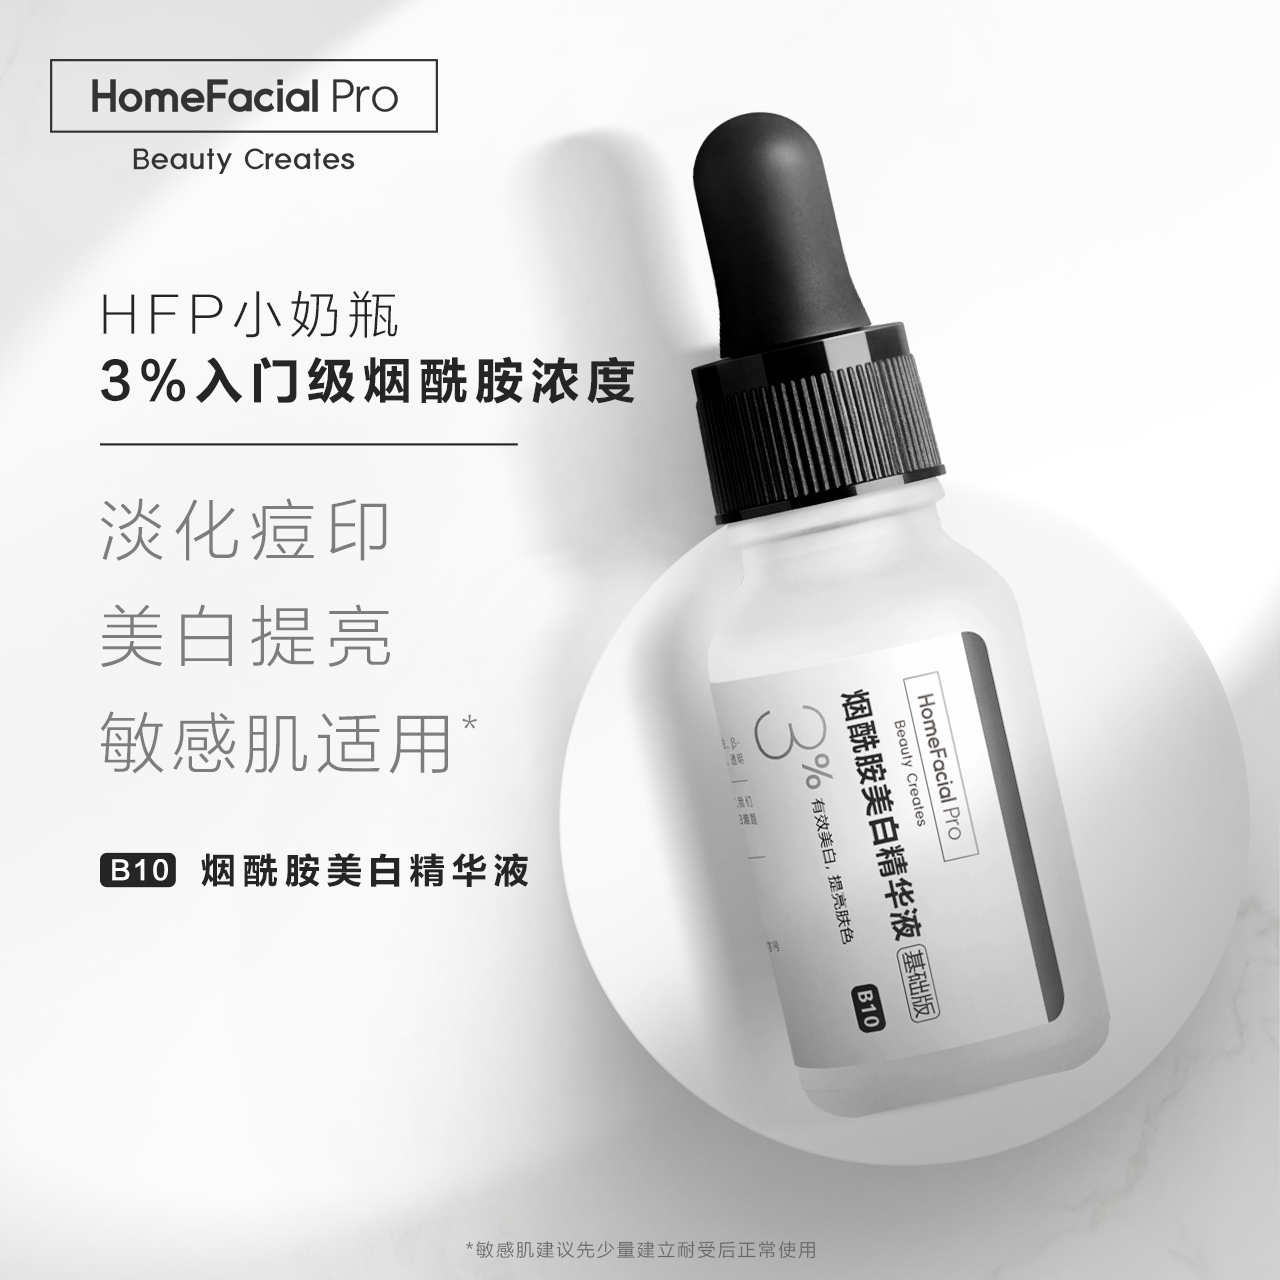 HFP明星原液套裝 祛痘收縮毛孔美白祛斑淡化